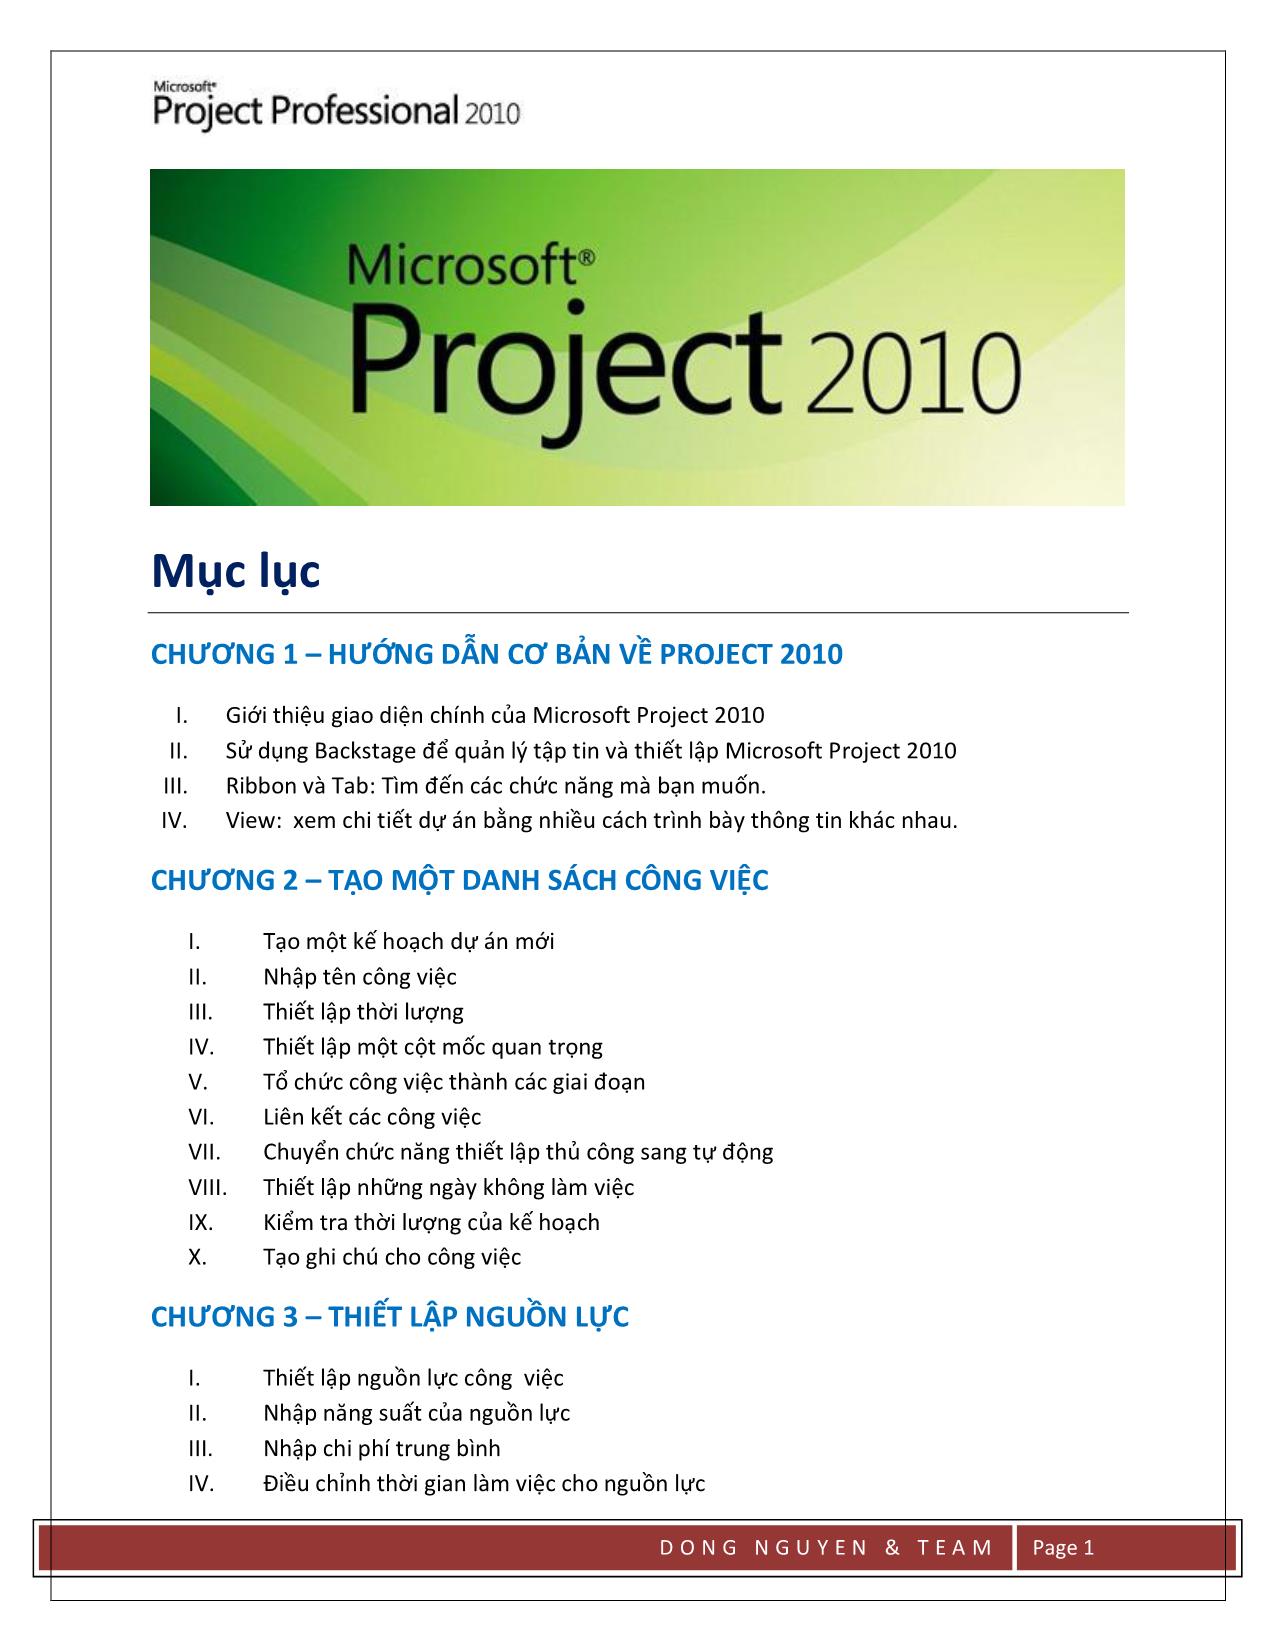 Microsoft Project 2010 trang 1